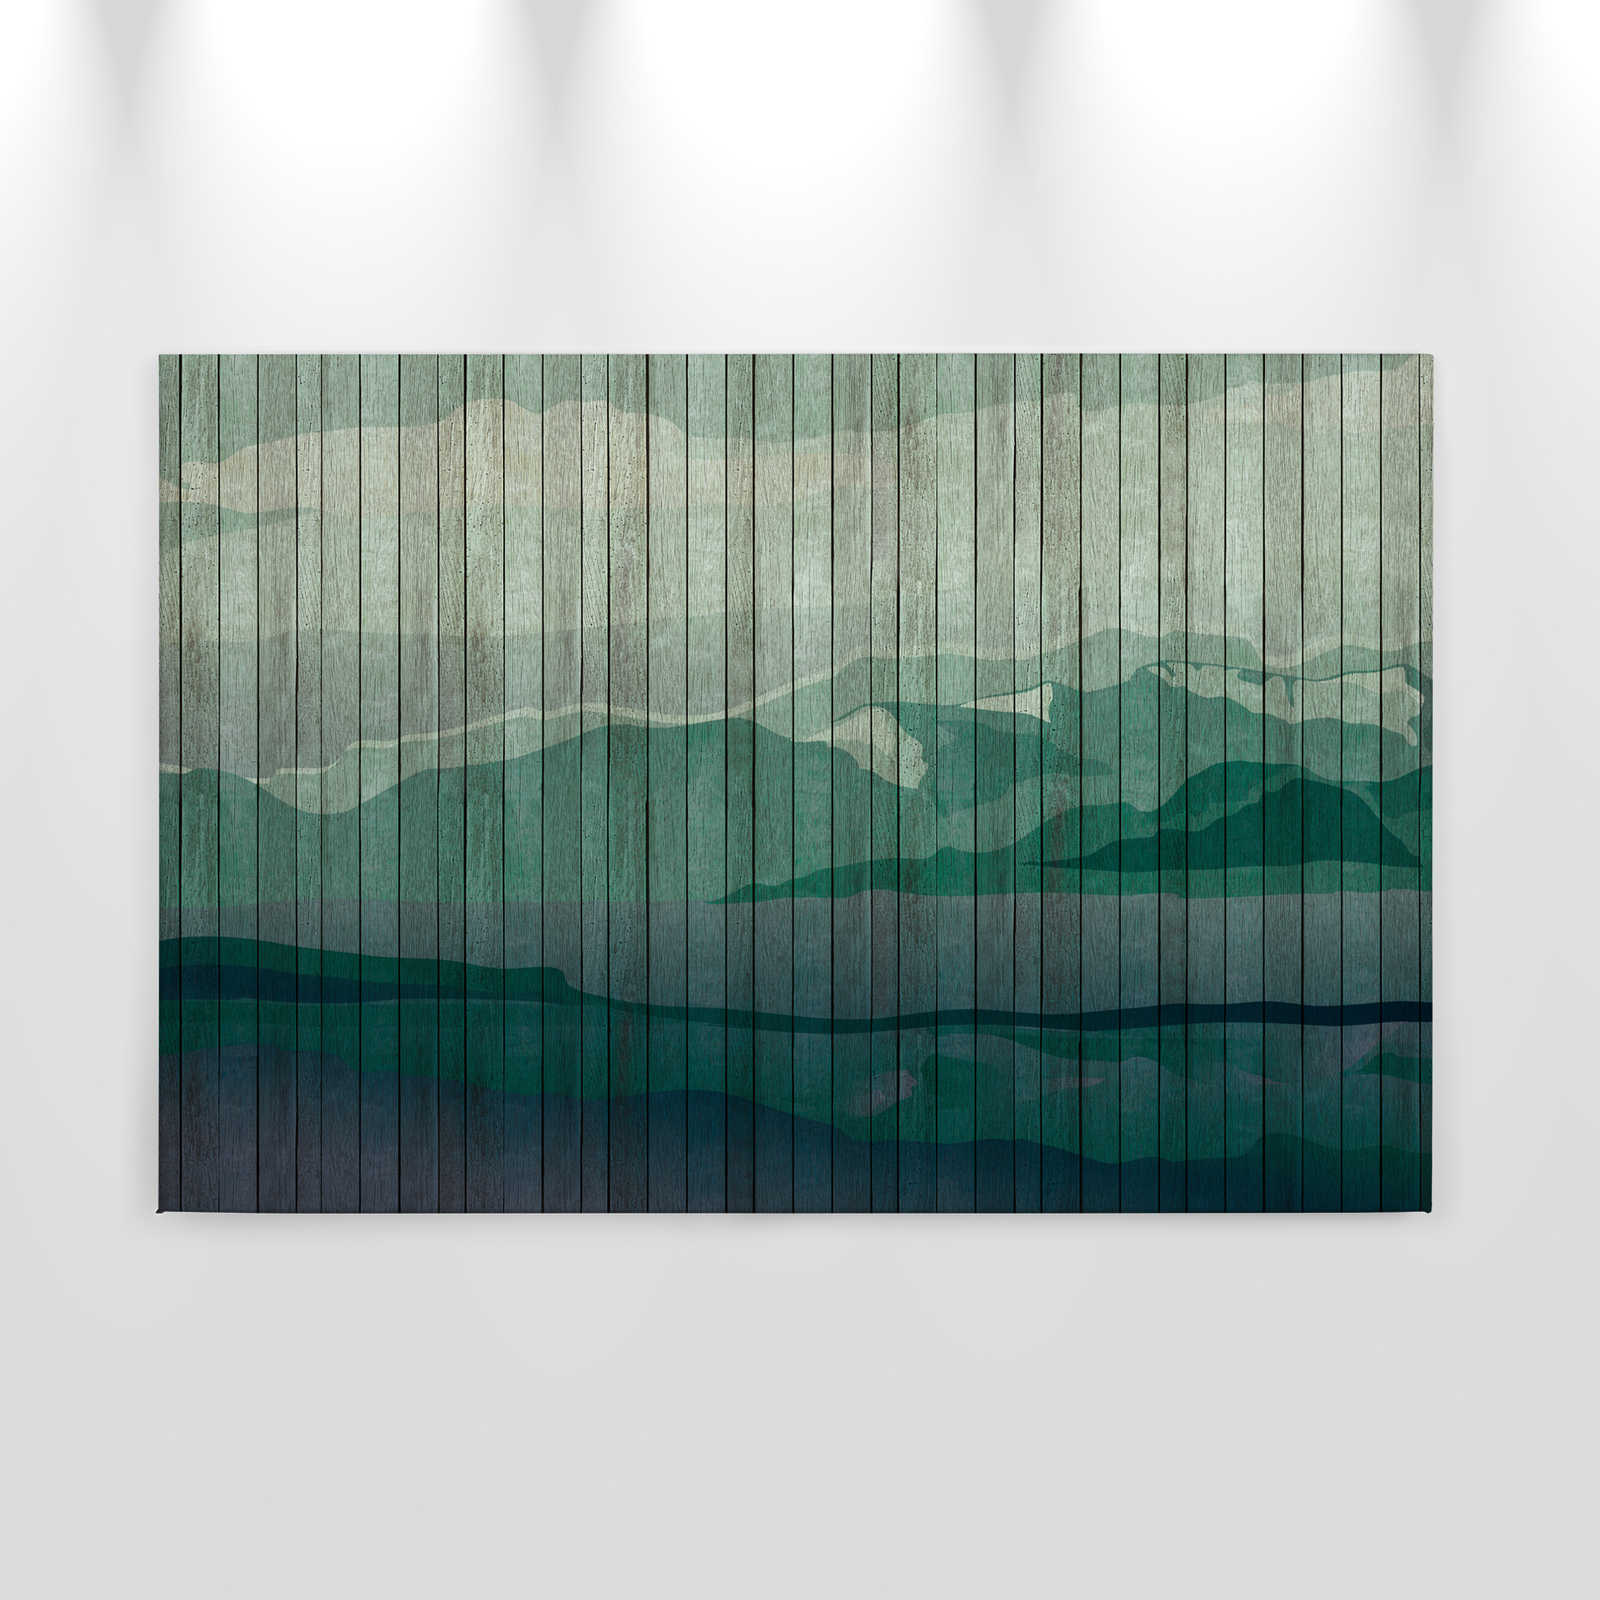             Mountains 3 - modern canvas picture mountain landscape & board optics - 0,90 m x 0,60 m
        